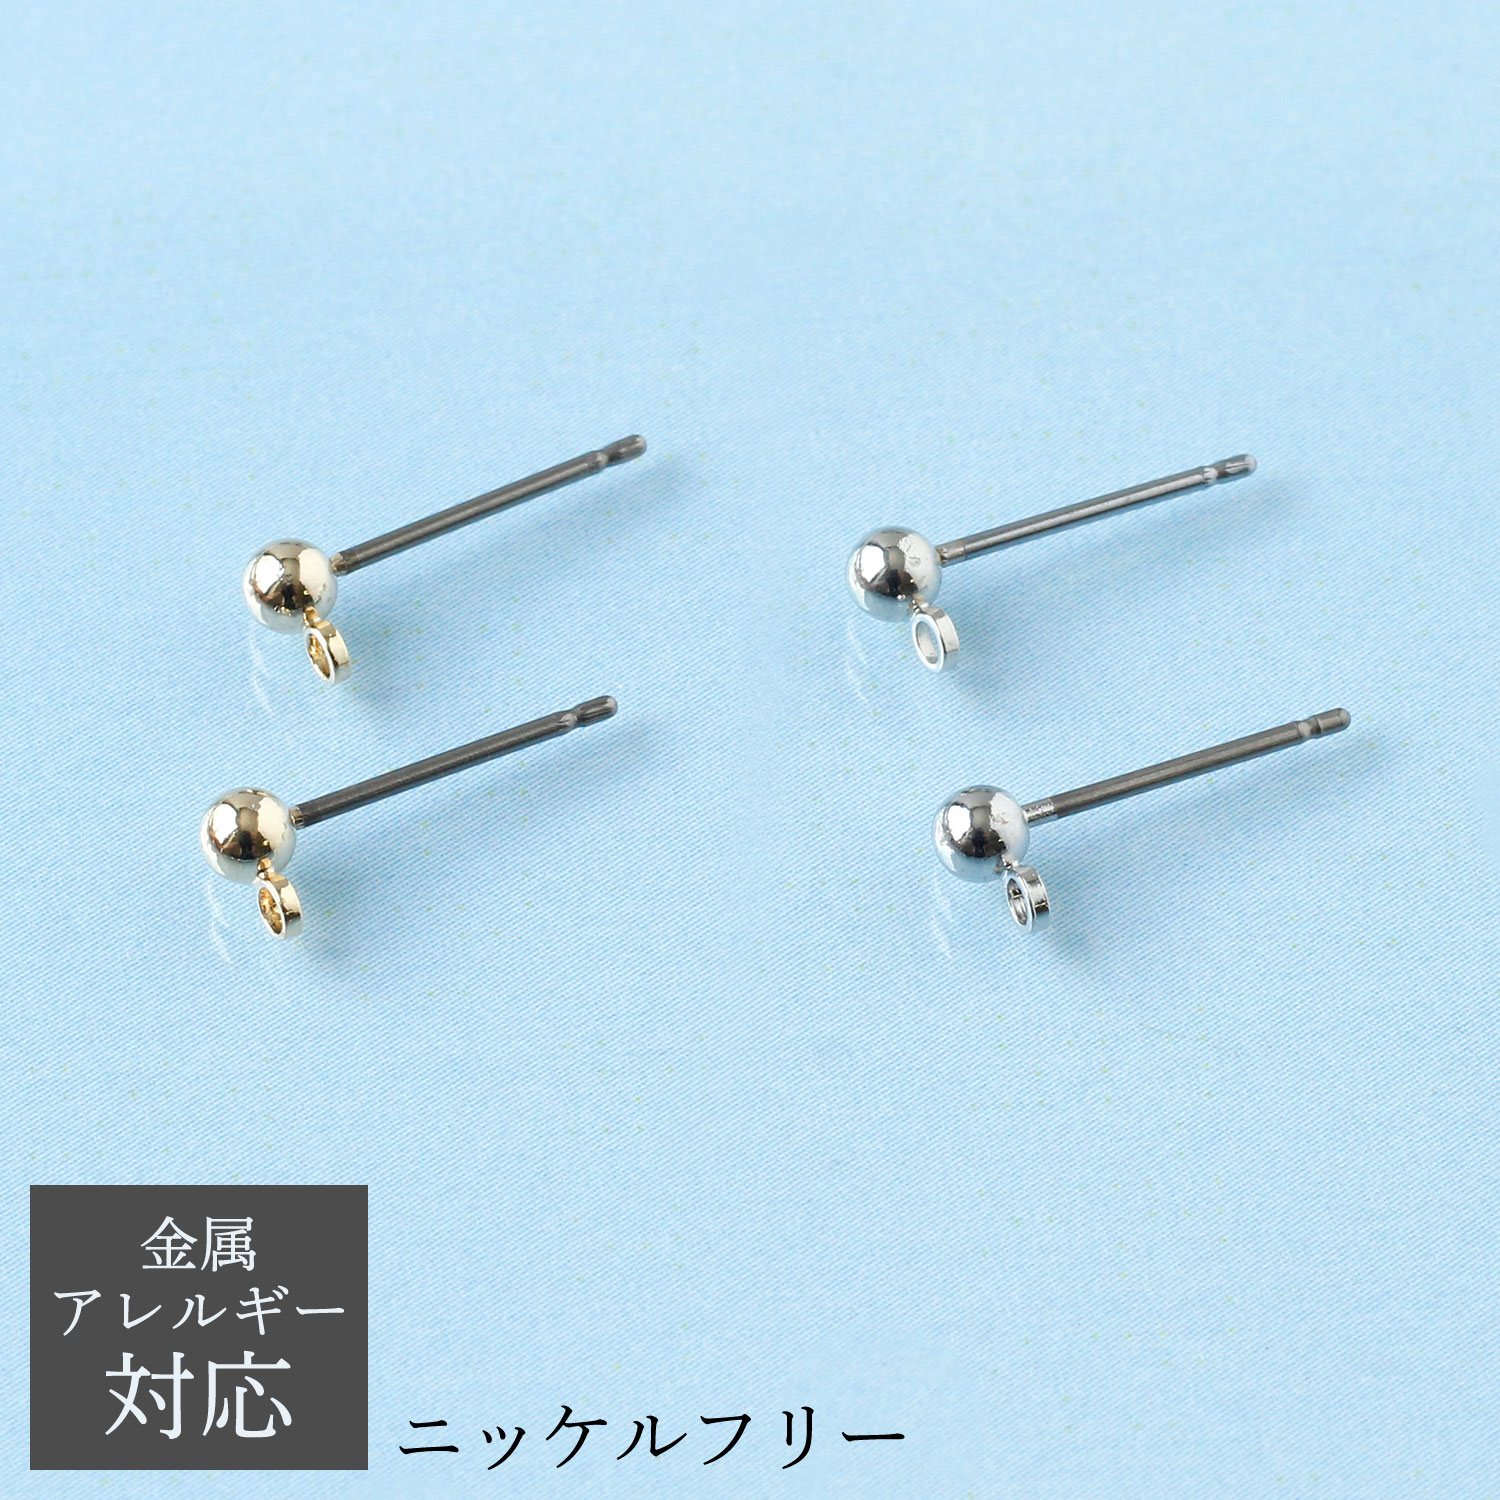 KE1503 Nickel-free earring with clasp 5 pairs (pack)